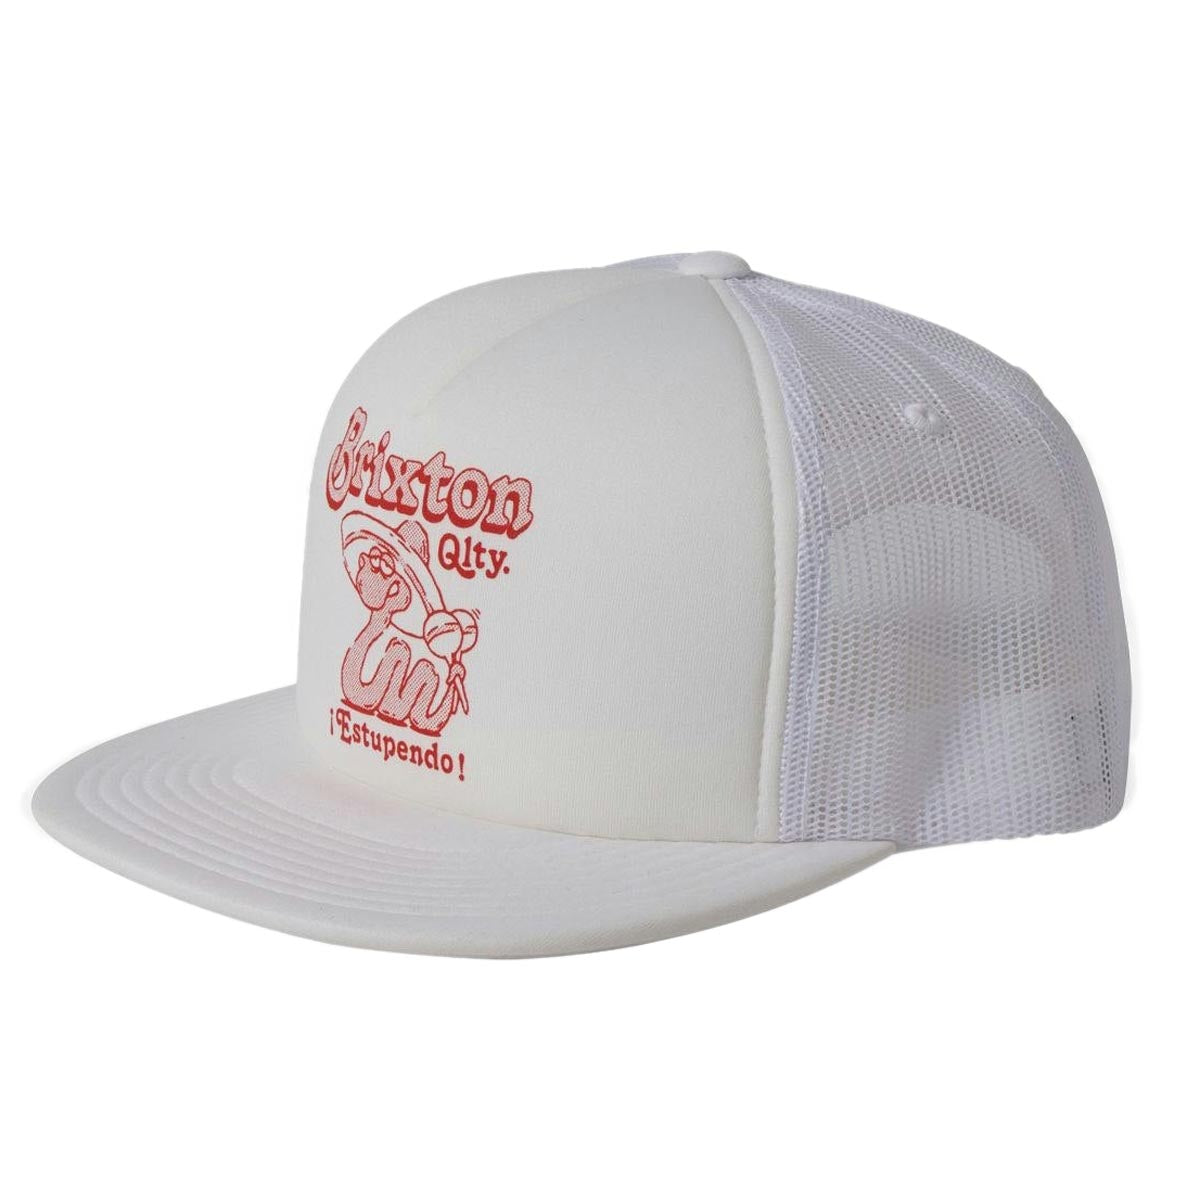 Brixton Estupendo Hp Trucker Hat - White